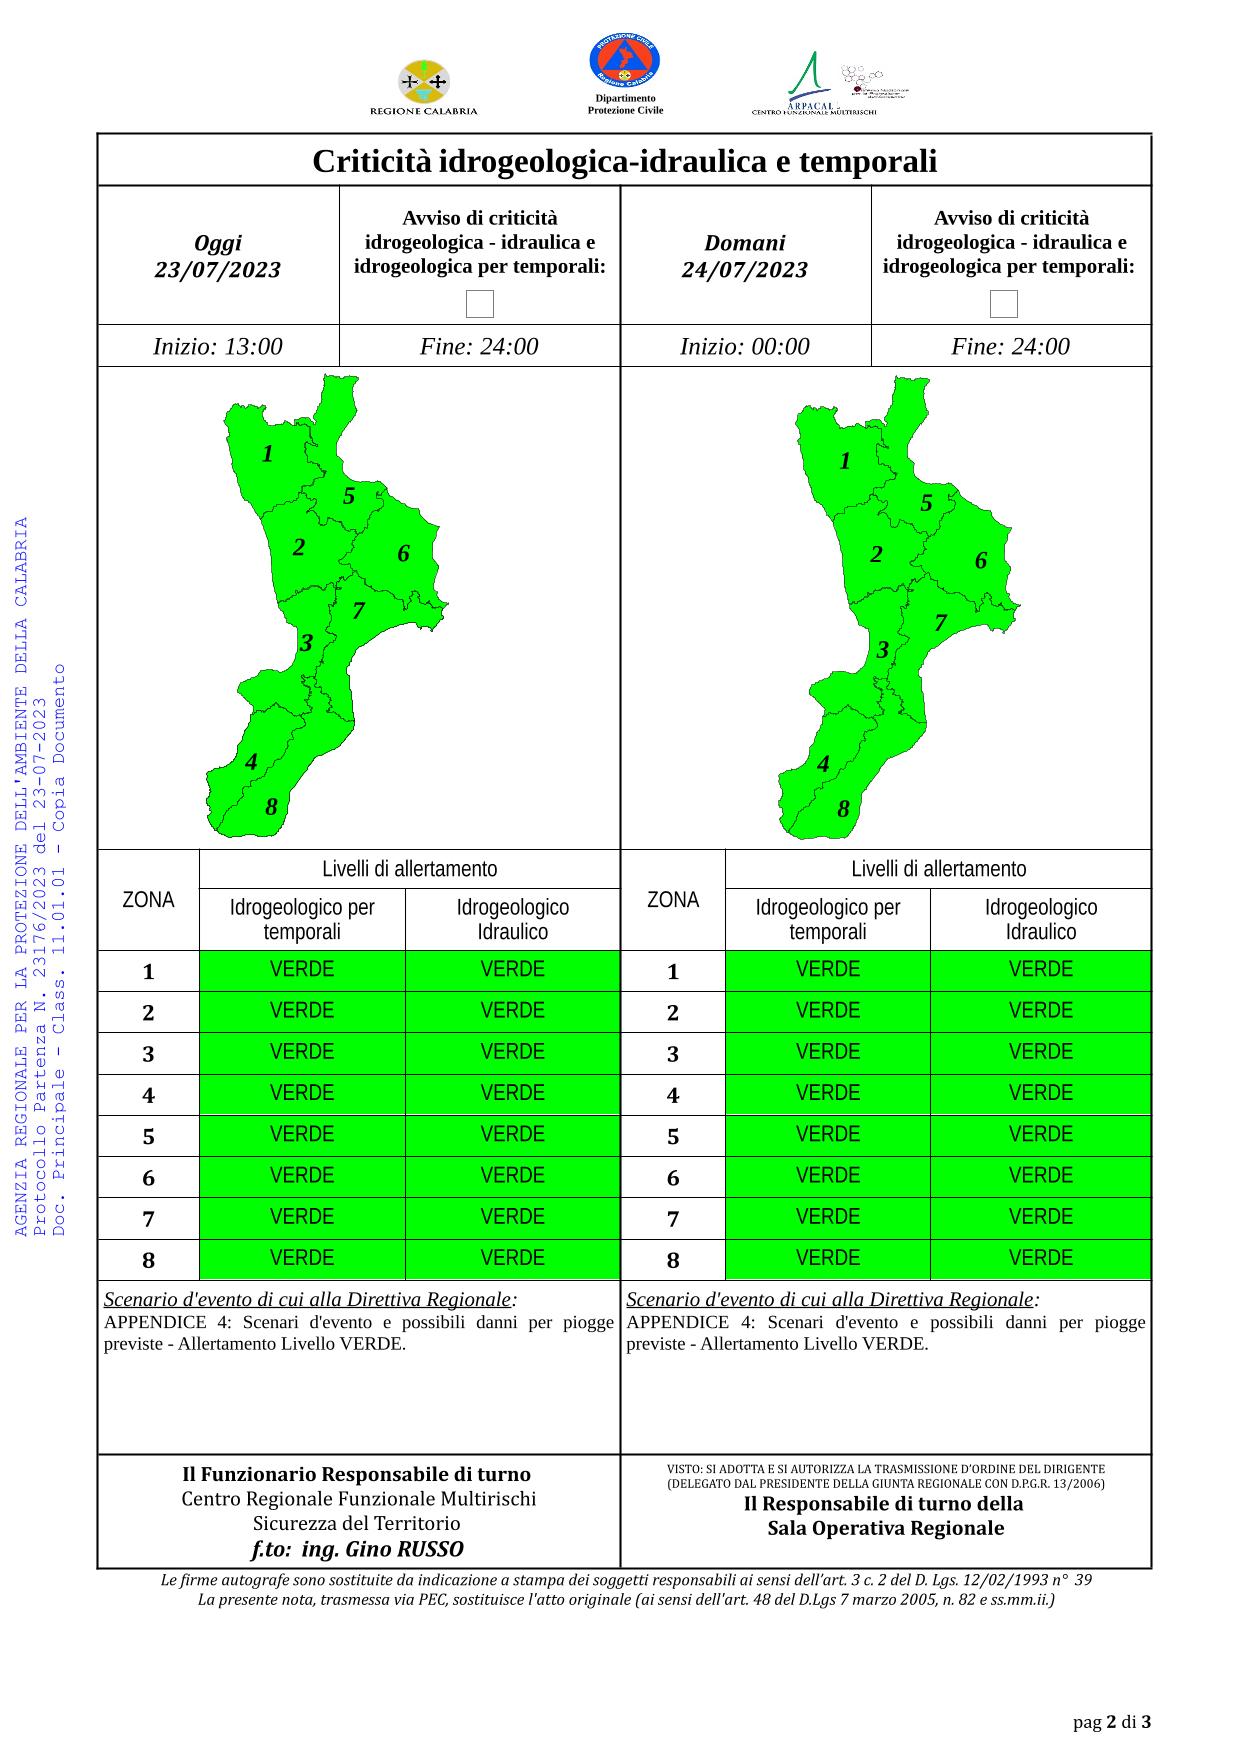 Criticità idrogeologica-idraulica e temporali in Calabria 23-07-2023